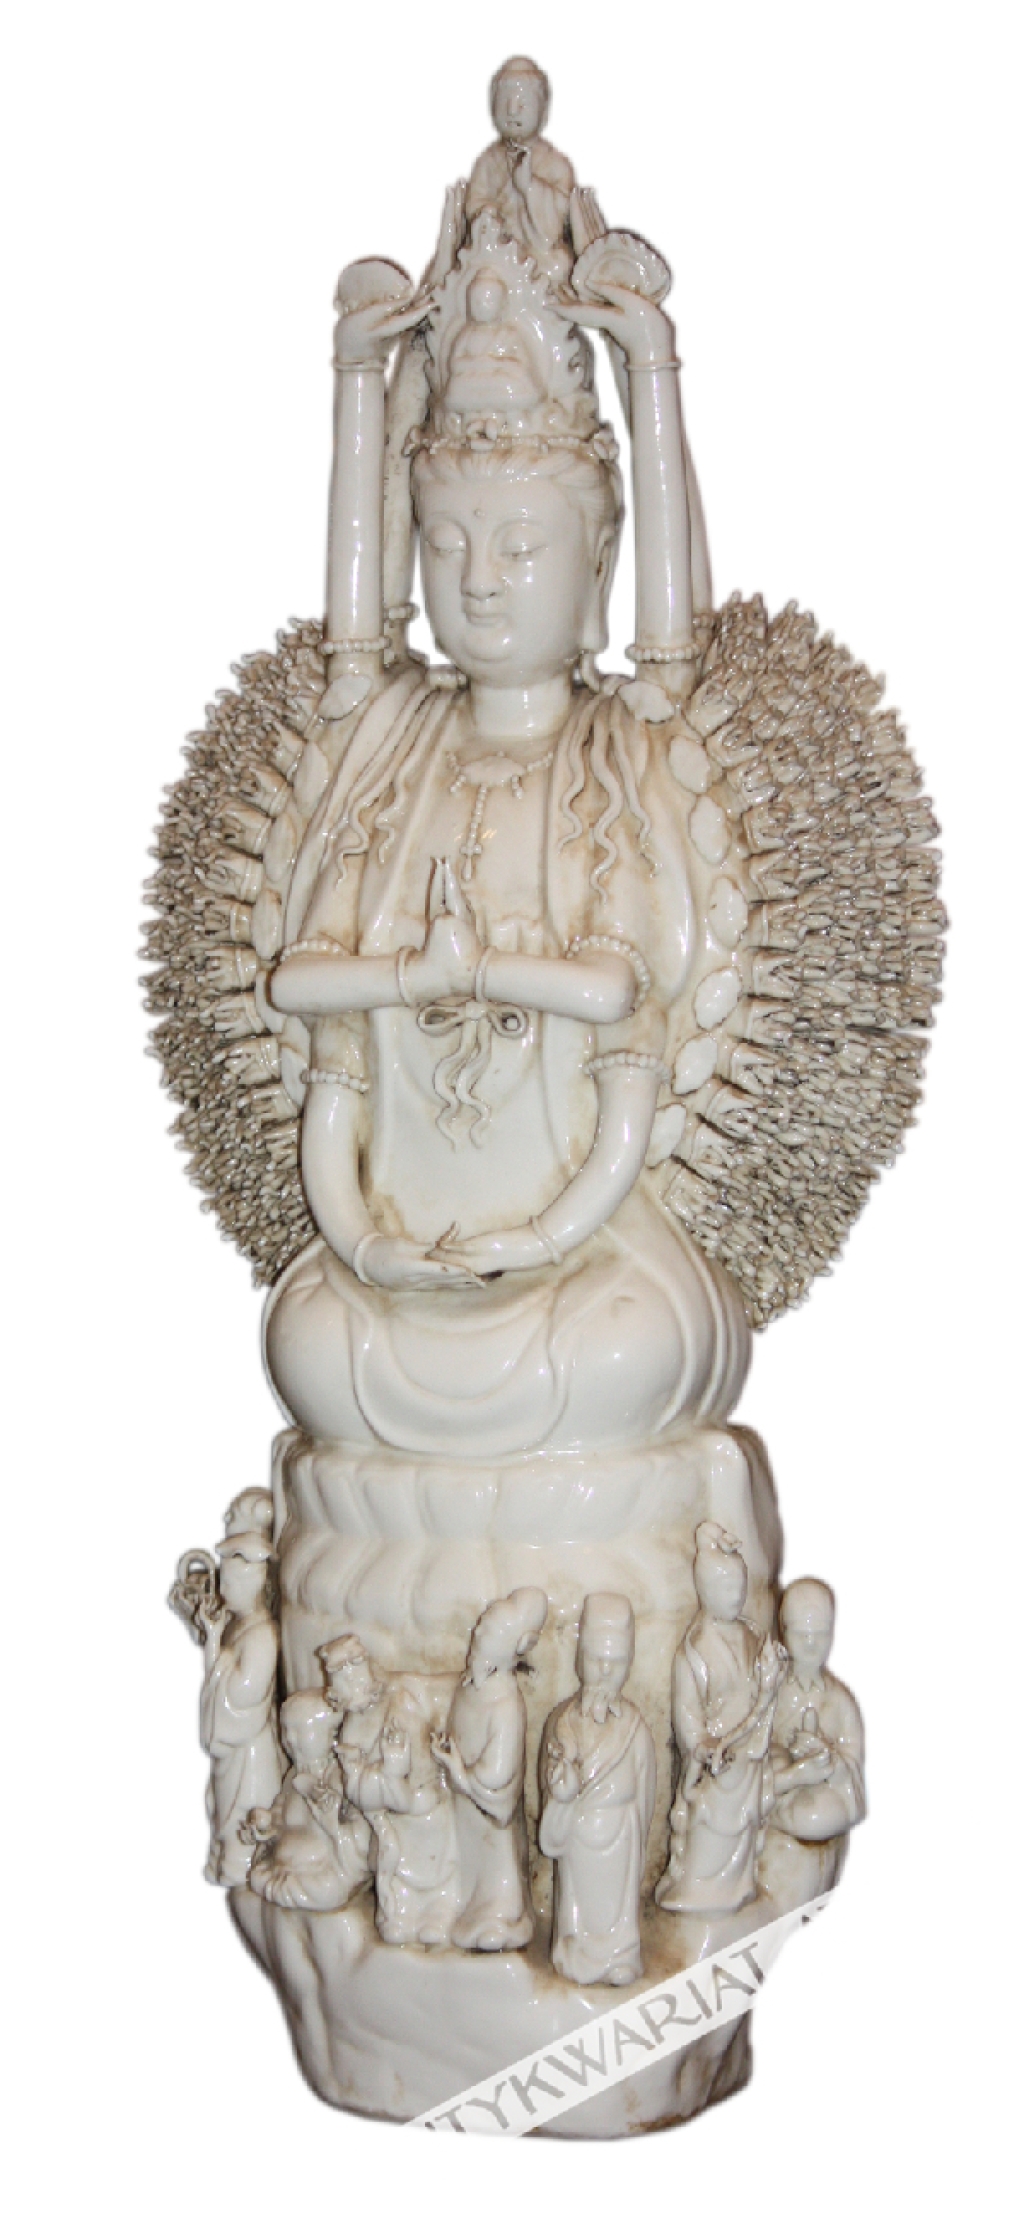 [ceramika, Chiny, ok. 1900 r.] Budda Awalokiteśwara